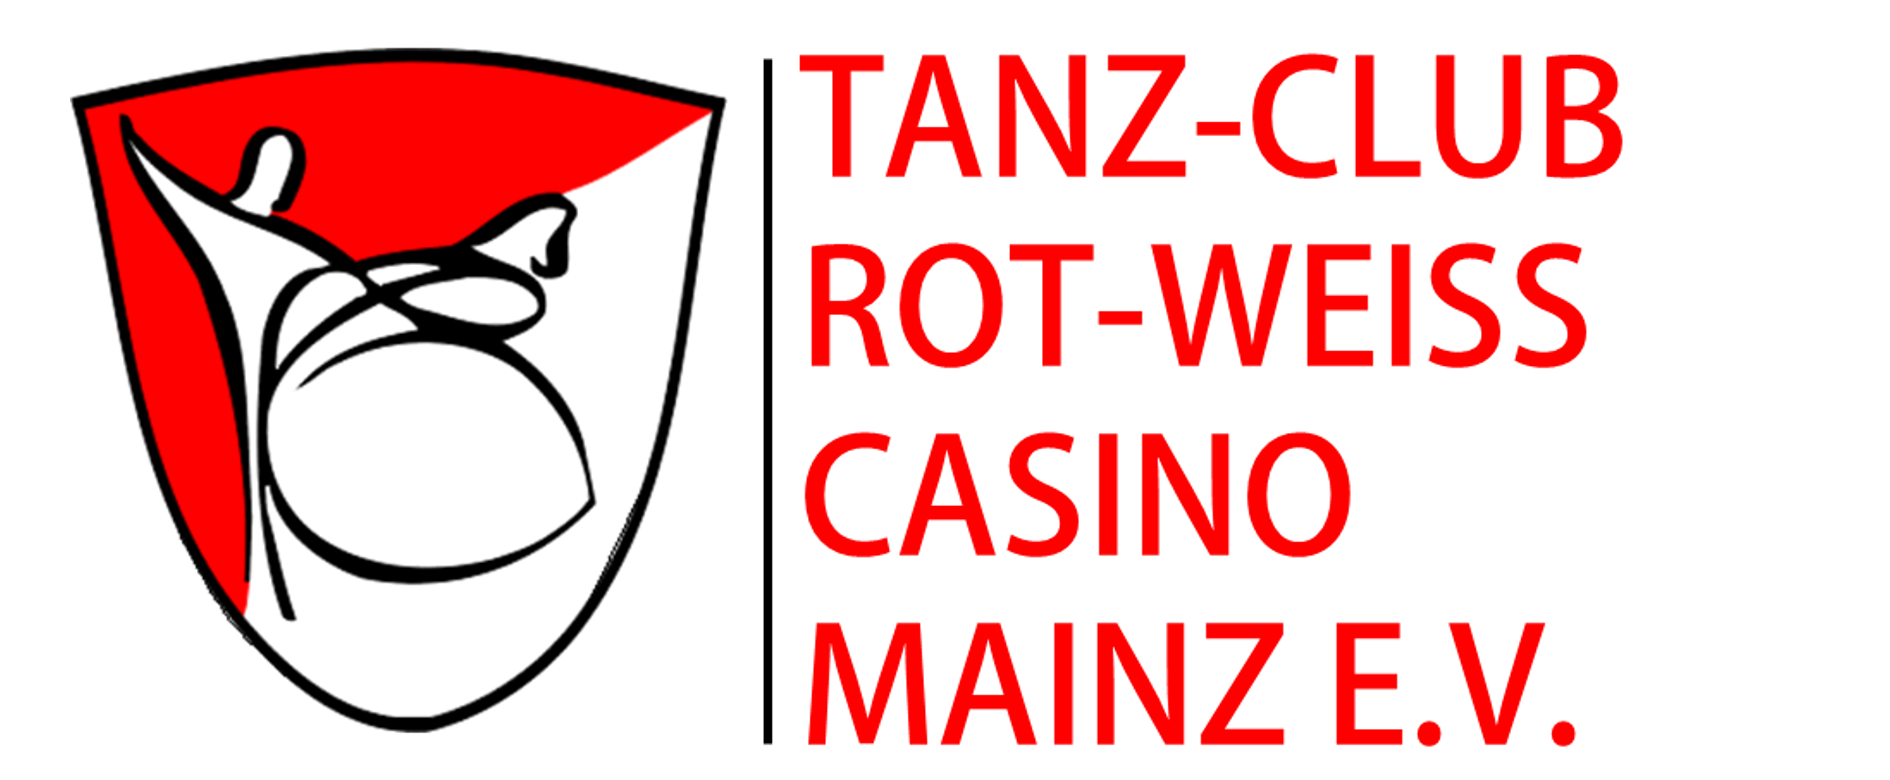 Tanz-Club Rot-Weiss Casino Mainz Logo